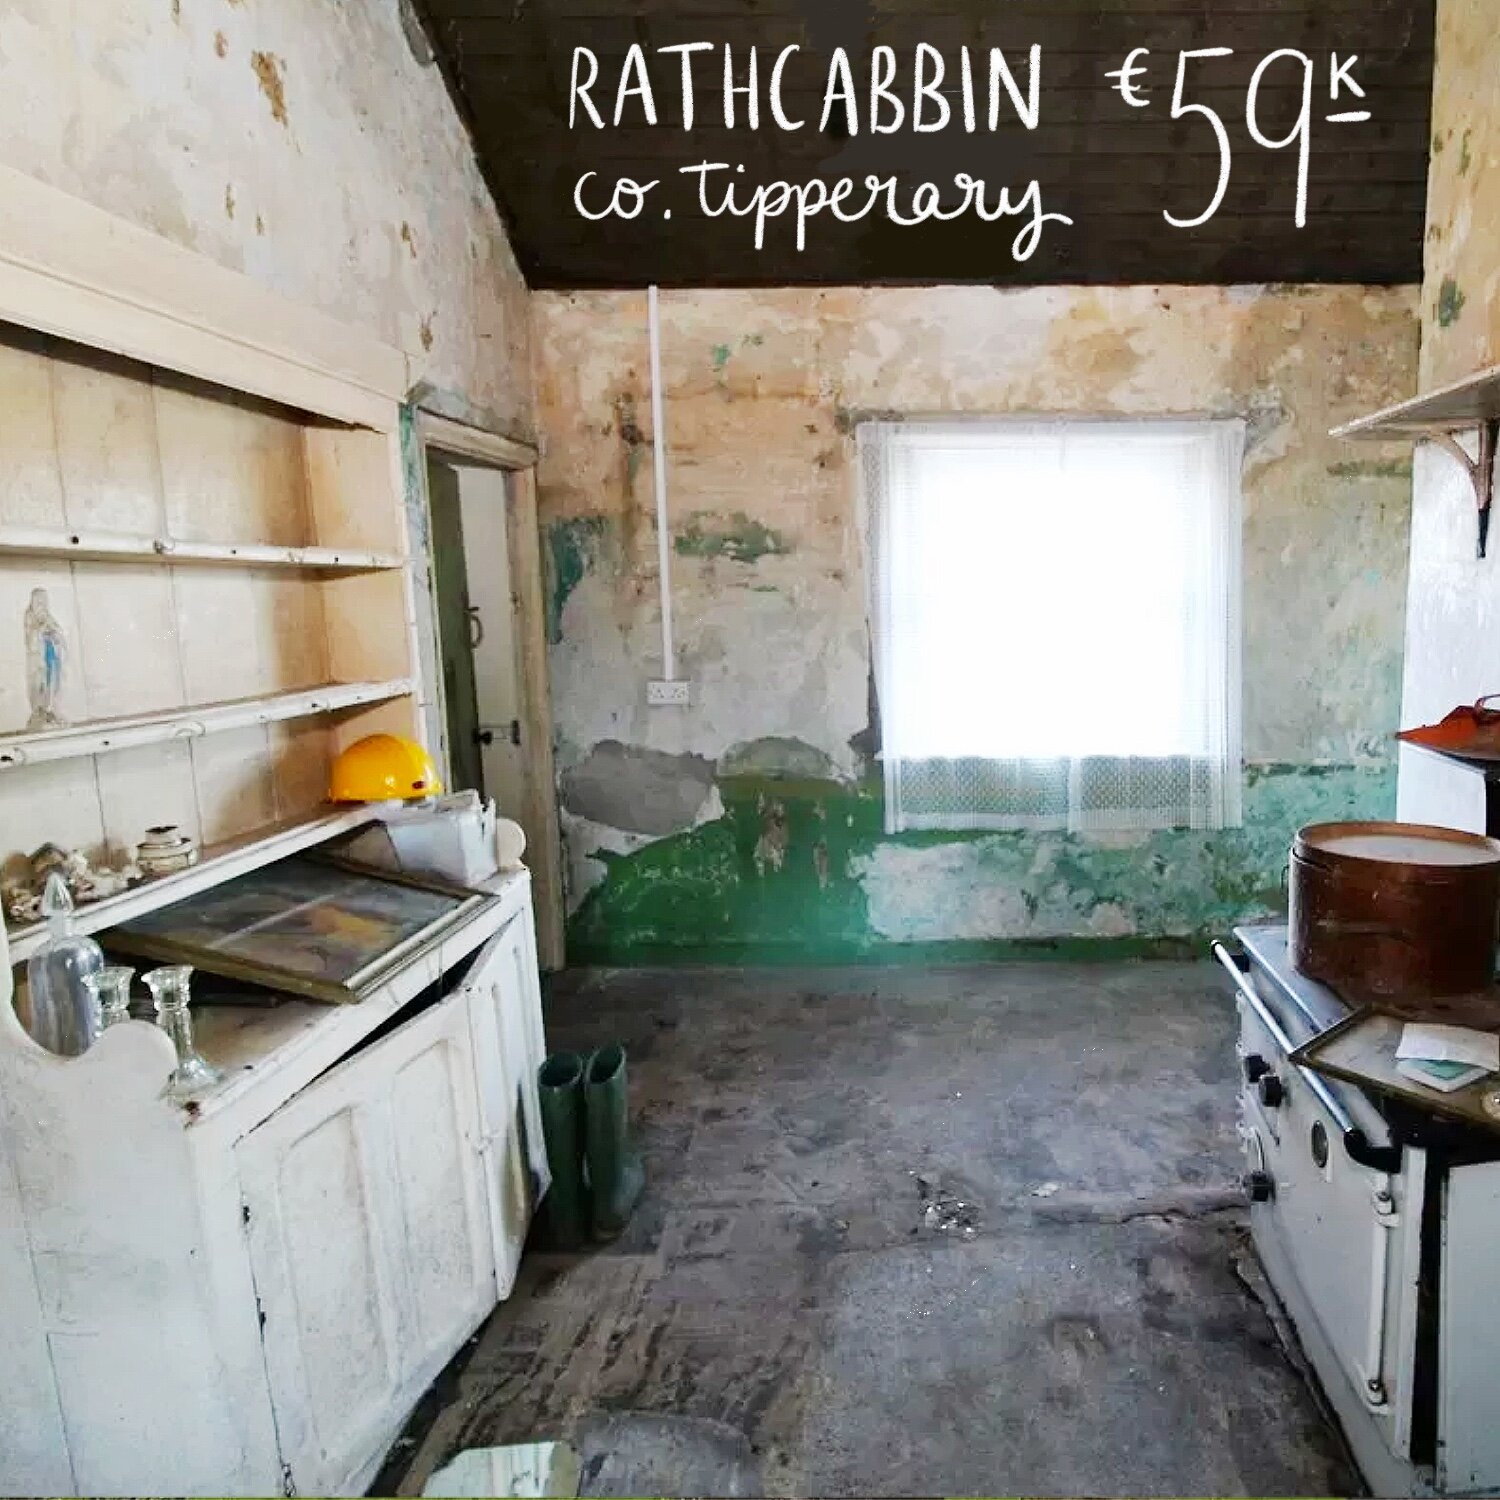 Rockview, Rathcabbin, Co. Tipperary. €59k